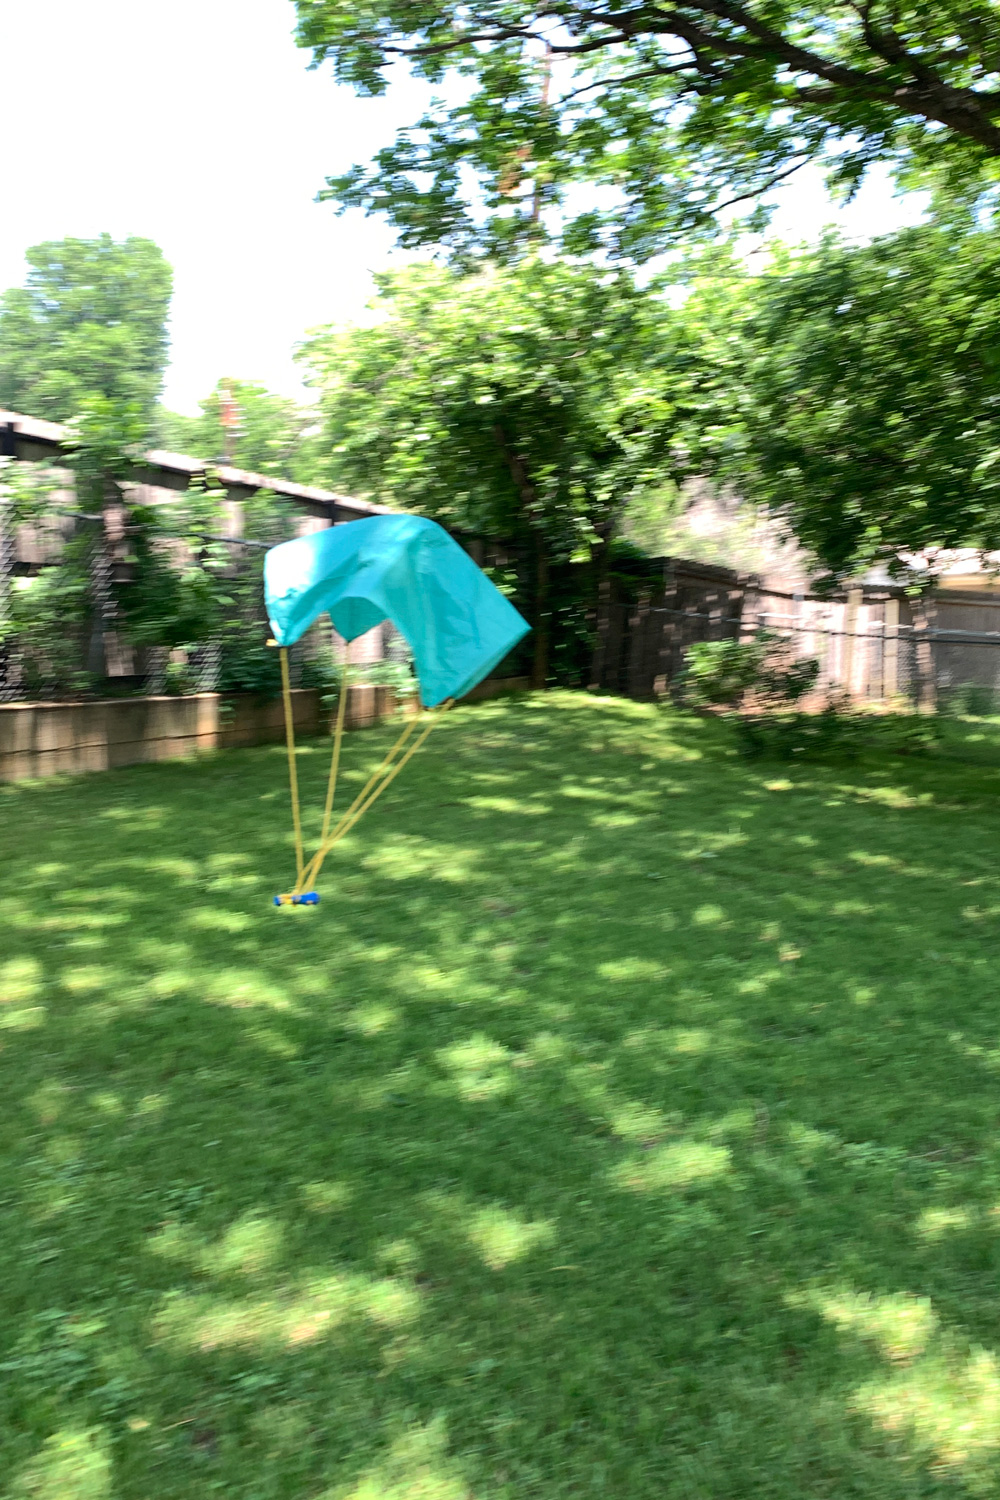 Tissue paper parachute carrying a minifigure through the air in a backyard.